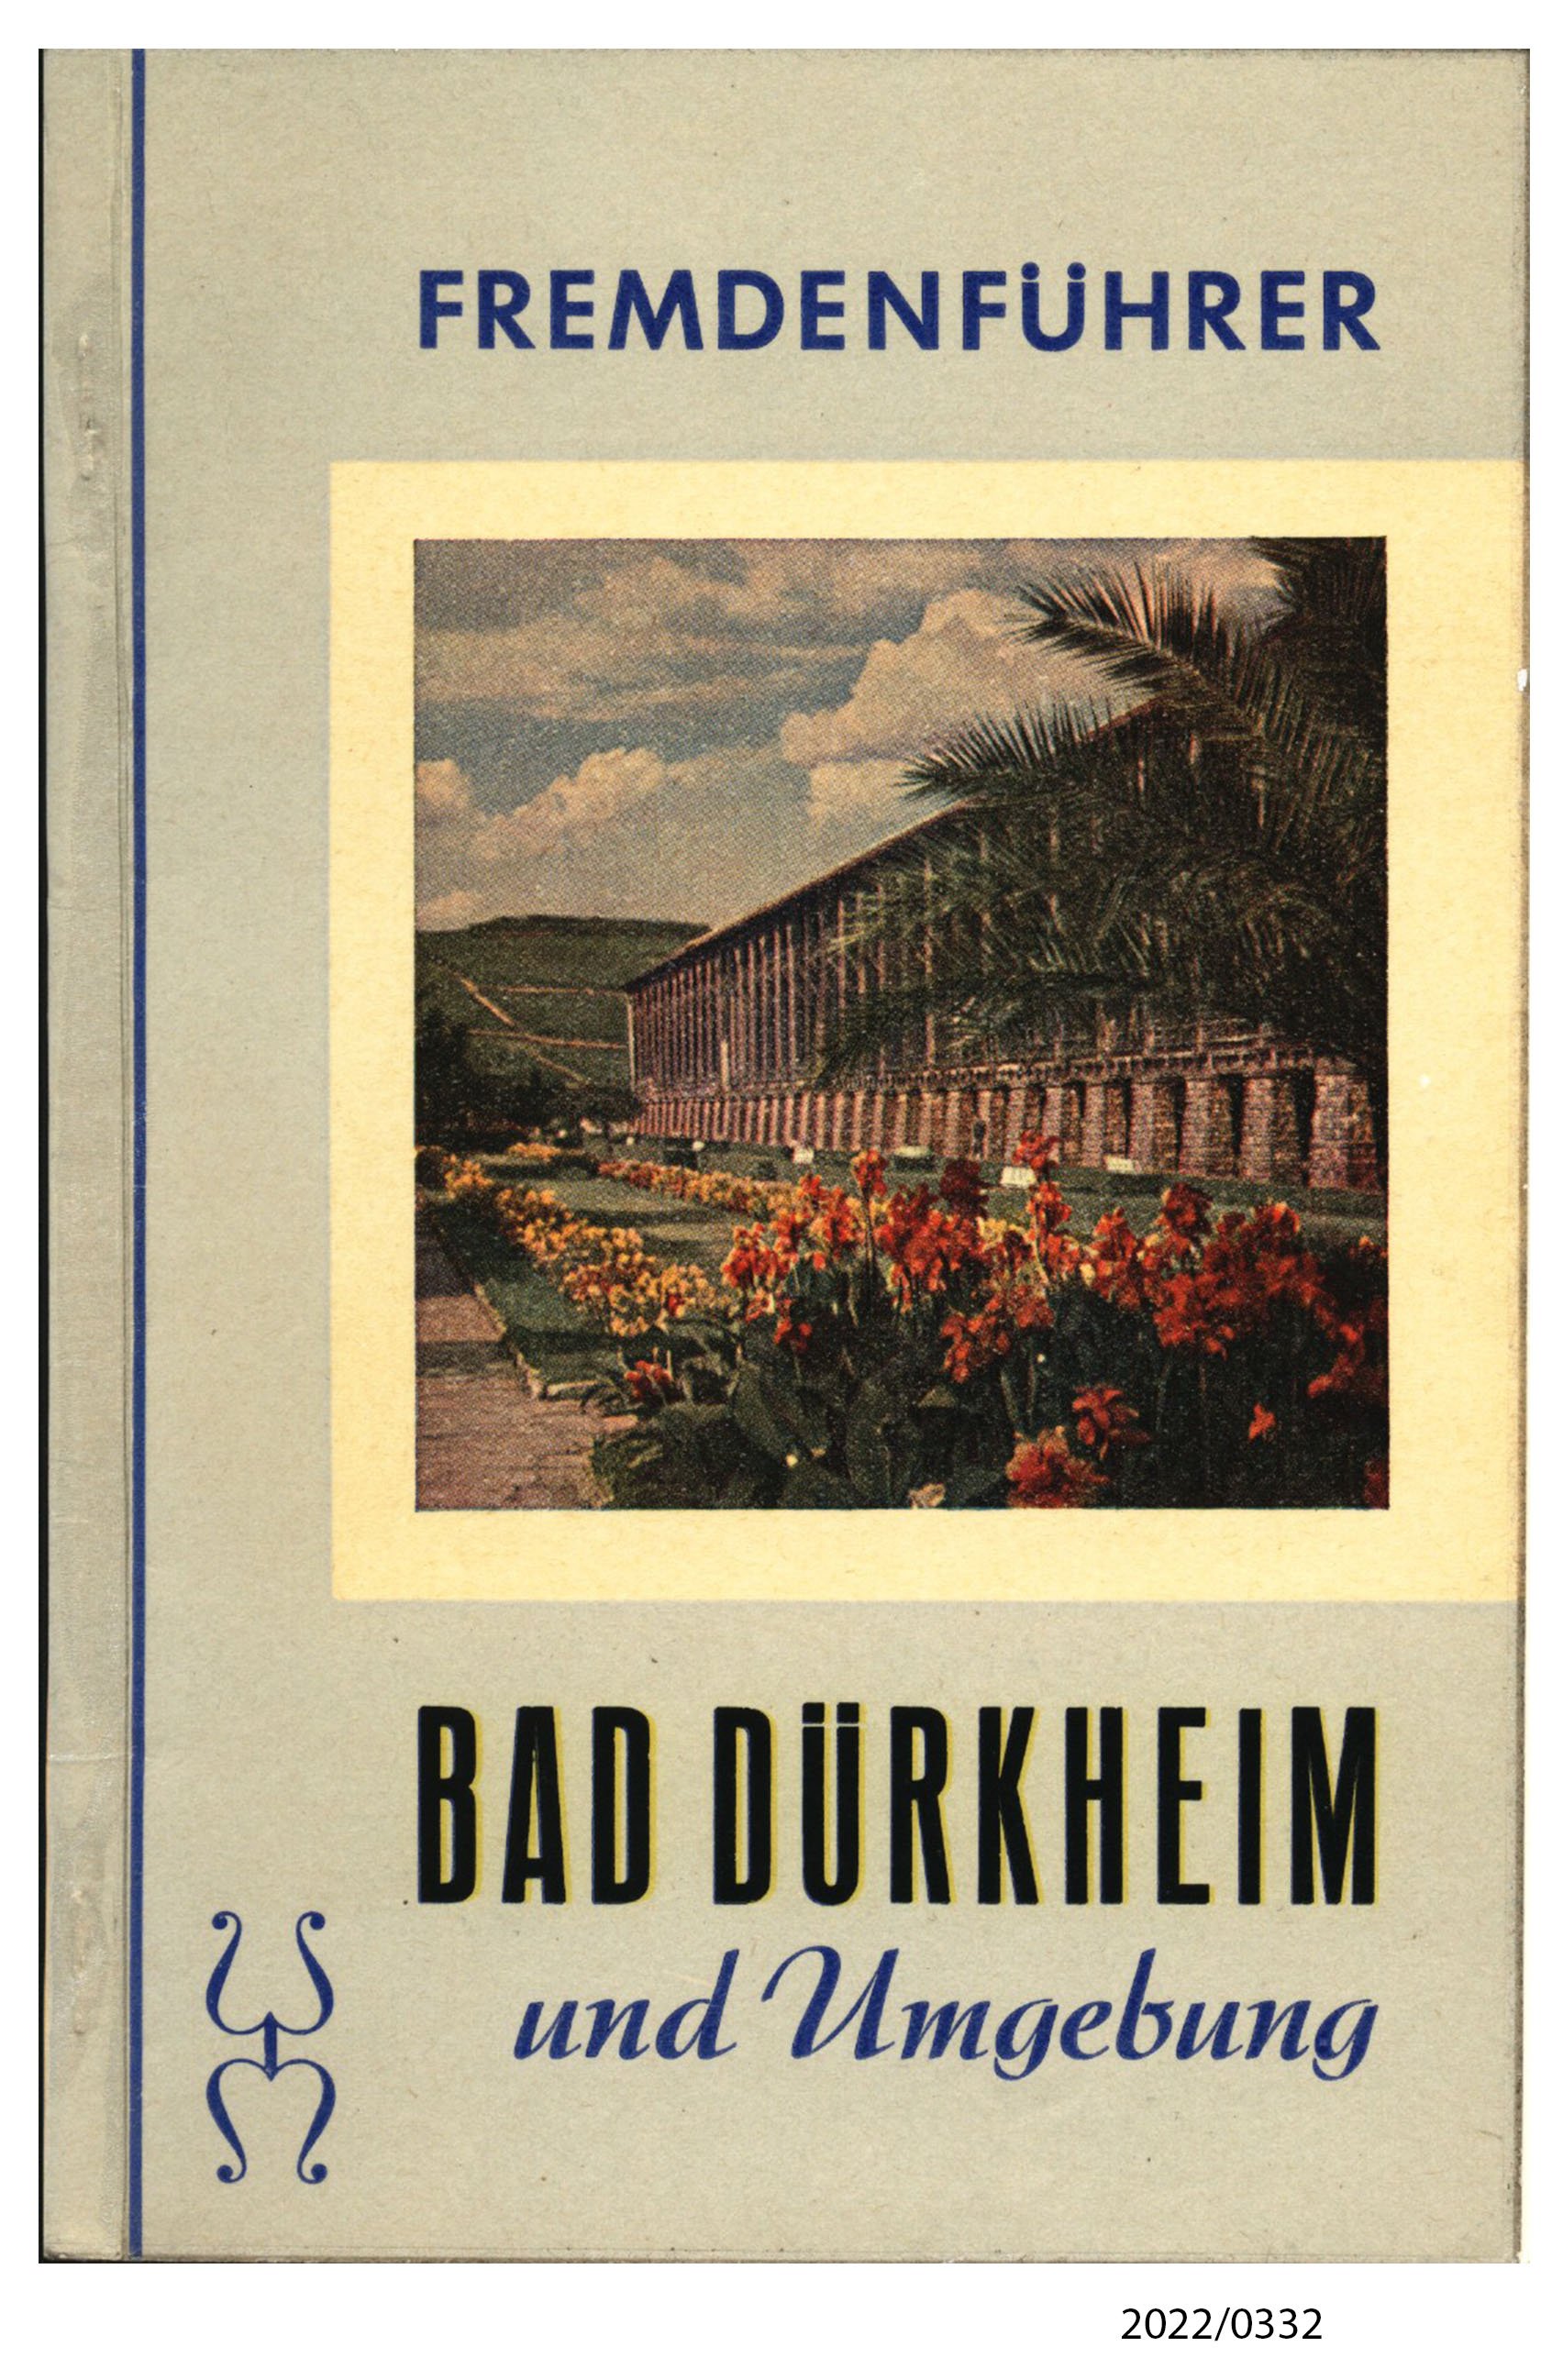 Buch "Fremdenführer Bad Dürkheim und Umgebung" (Stadtmuseum Bad Dürkheim im Kulturzentrum Haus Catoir CC BY-NC-SA)